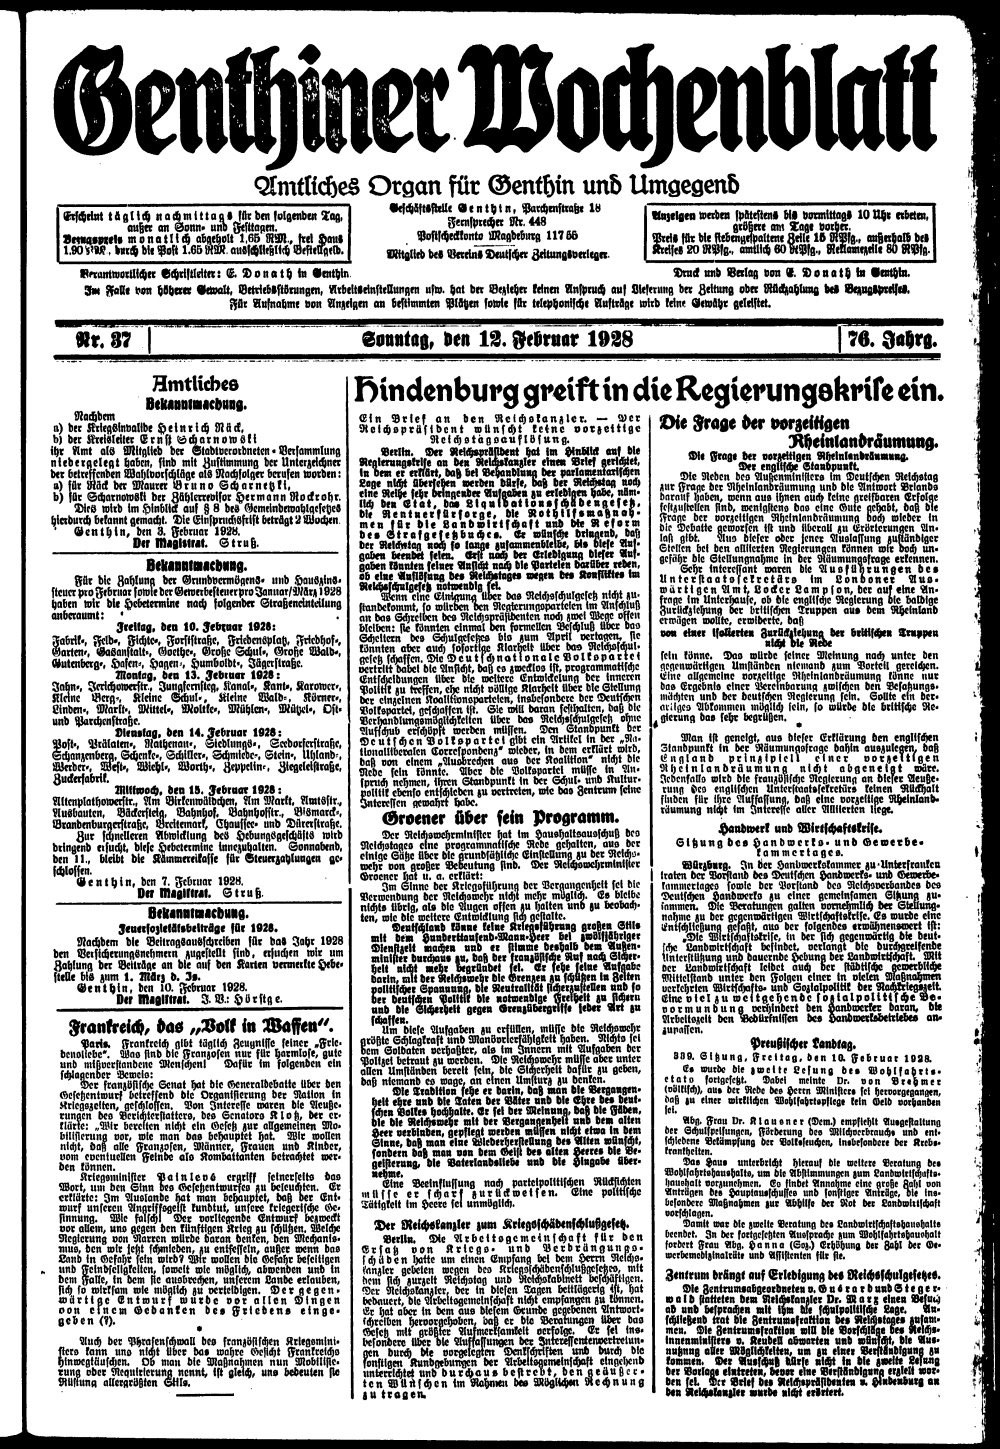 Zeitung Genthiner Wochenblatt 12.2.1928 (Kreismuseum Jerichower Land, Genthin CC BY-NC-SA)